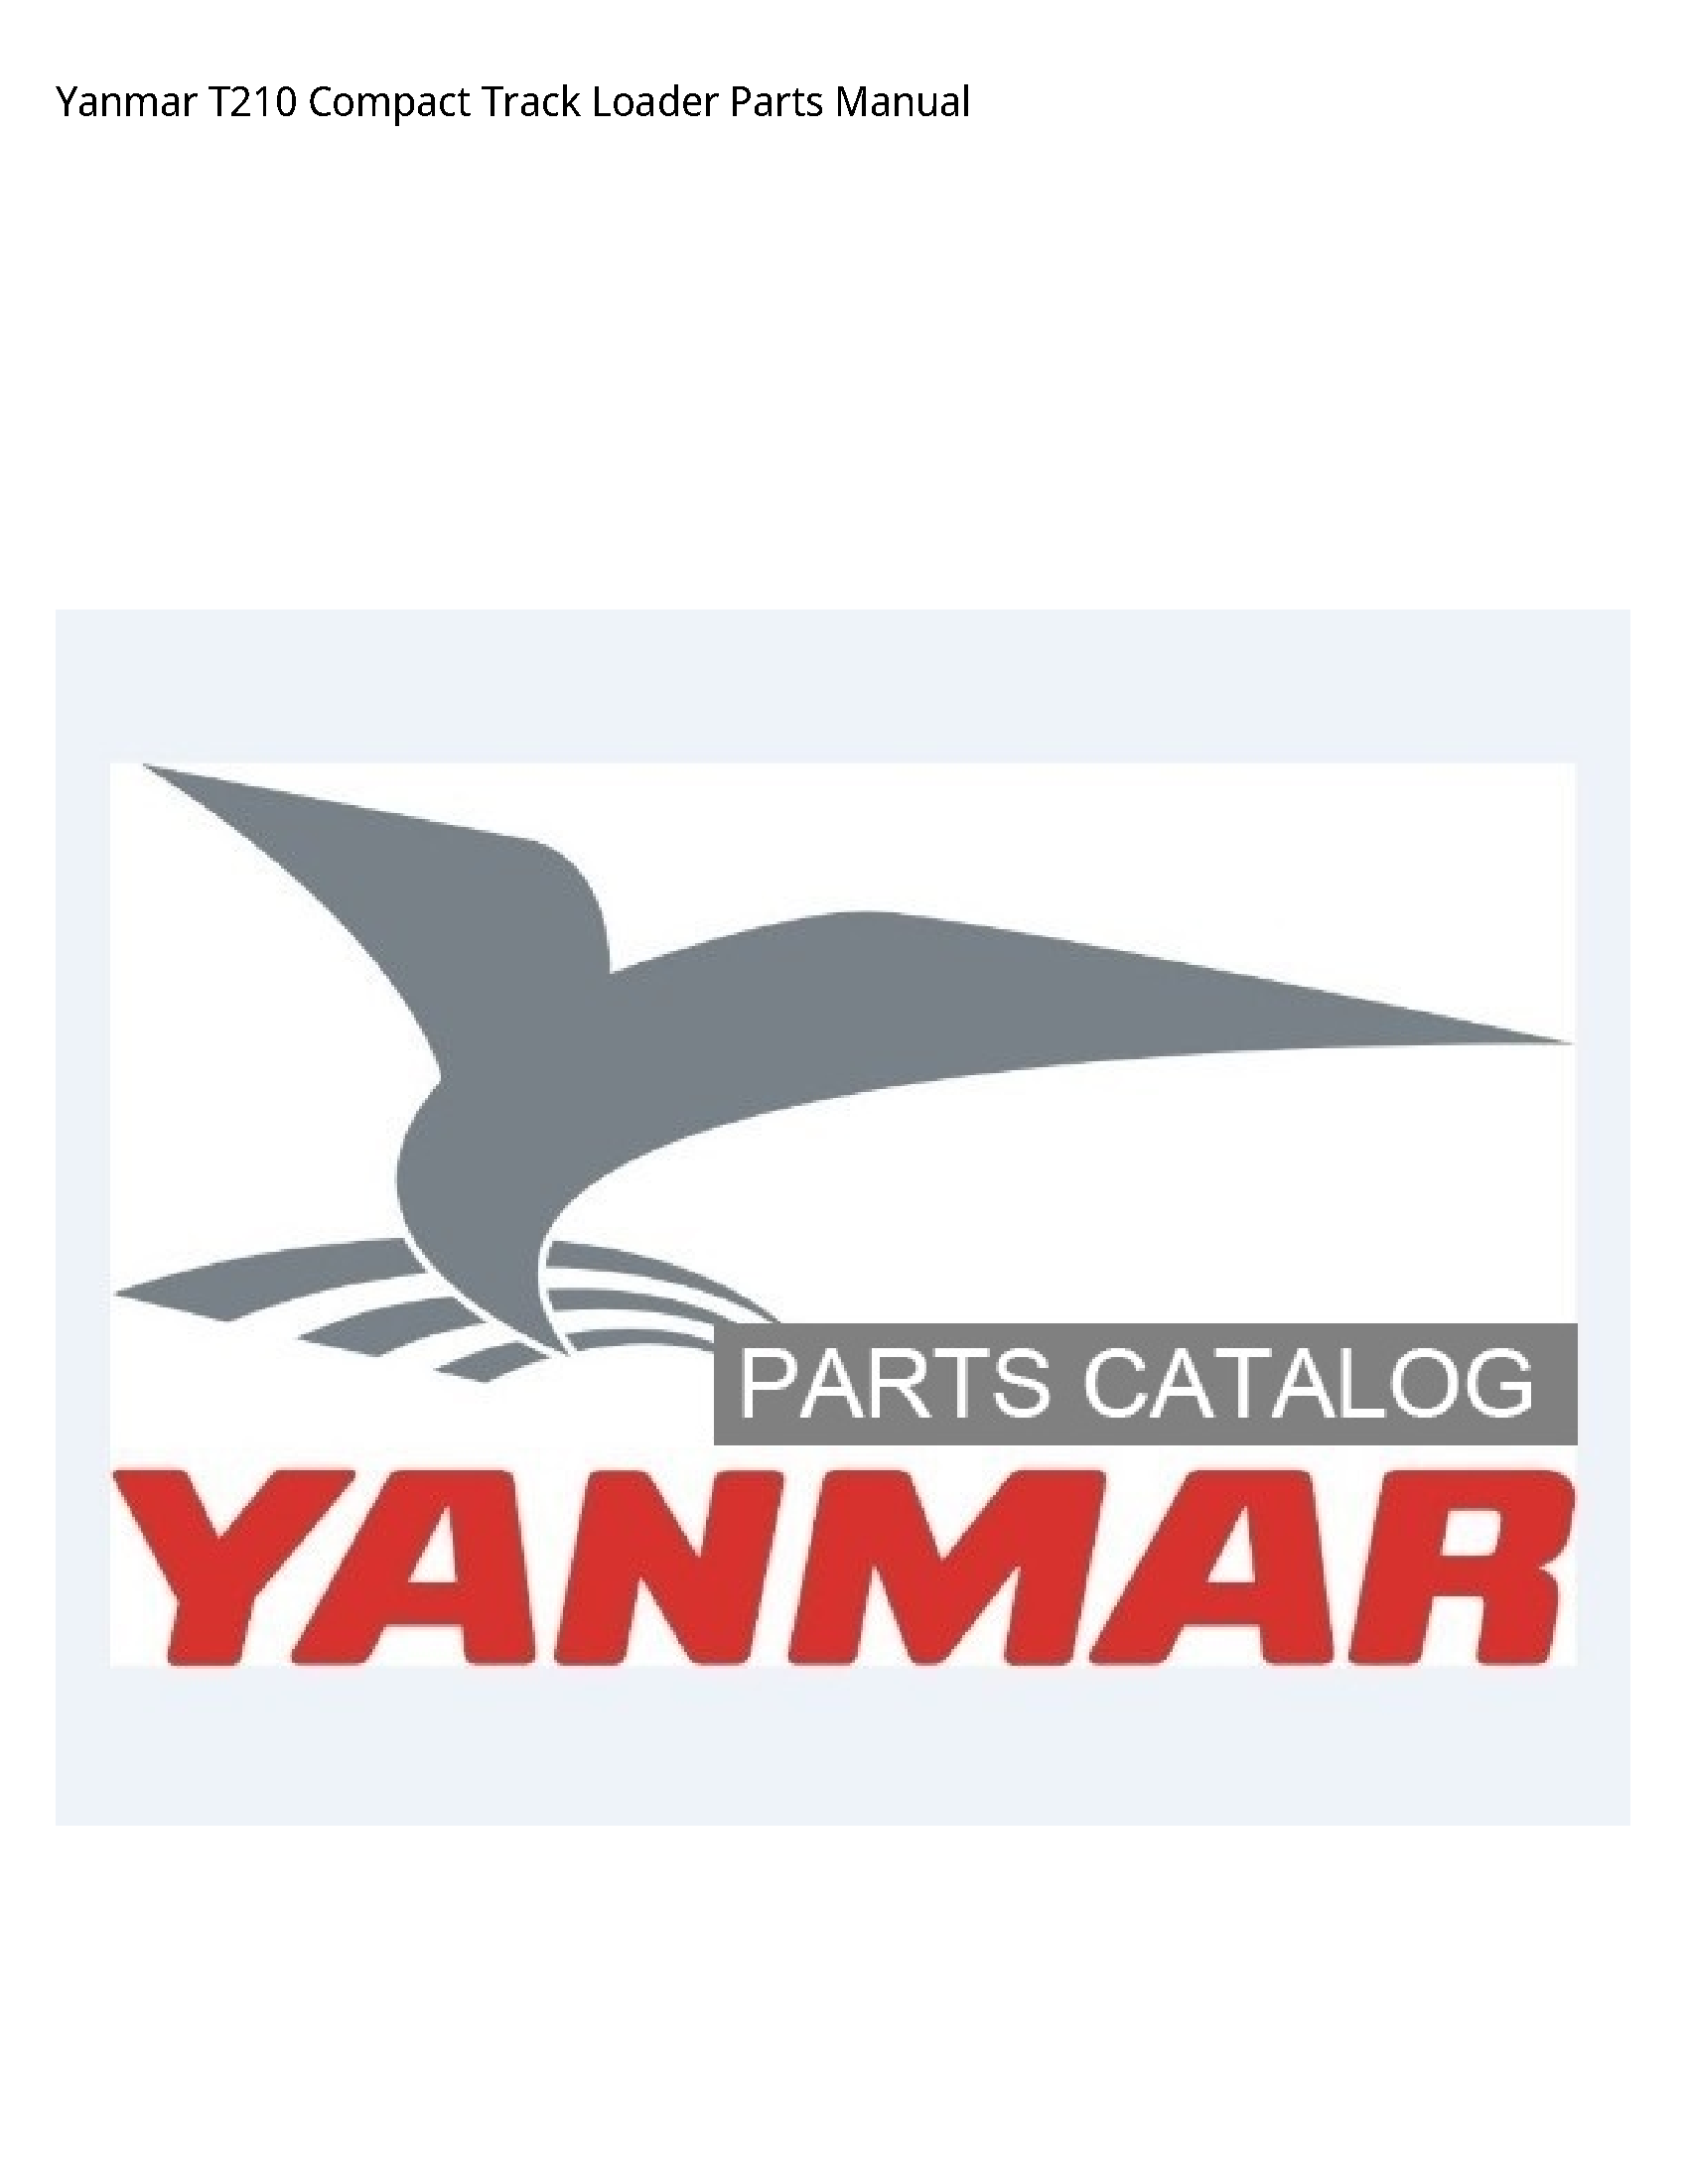 Yanmar T210 Compact Track Loader Parts manual